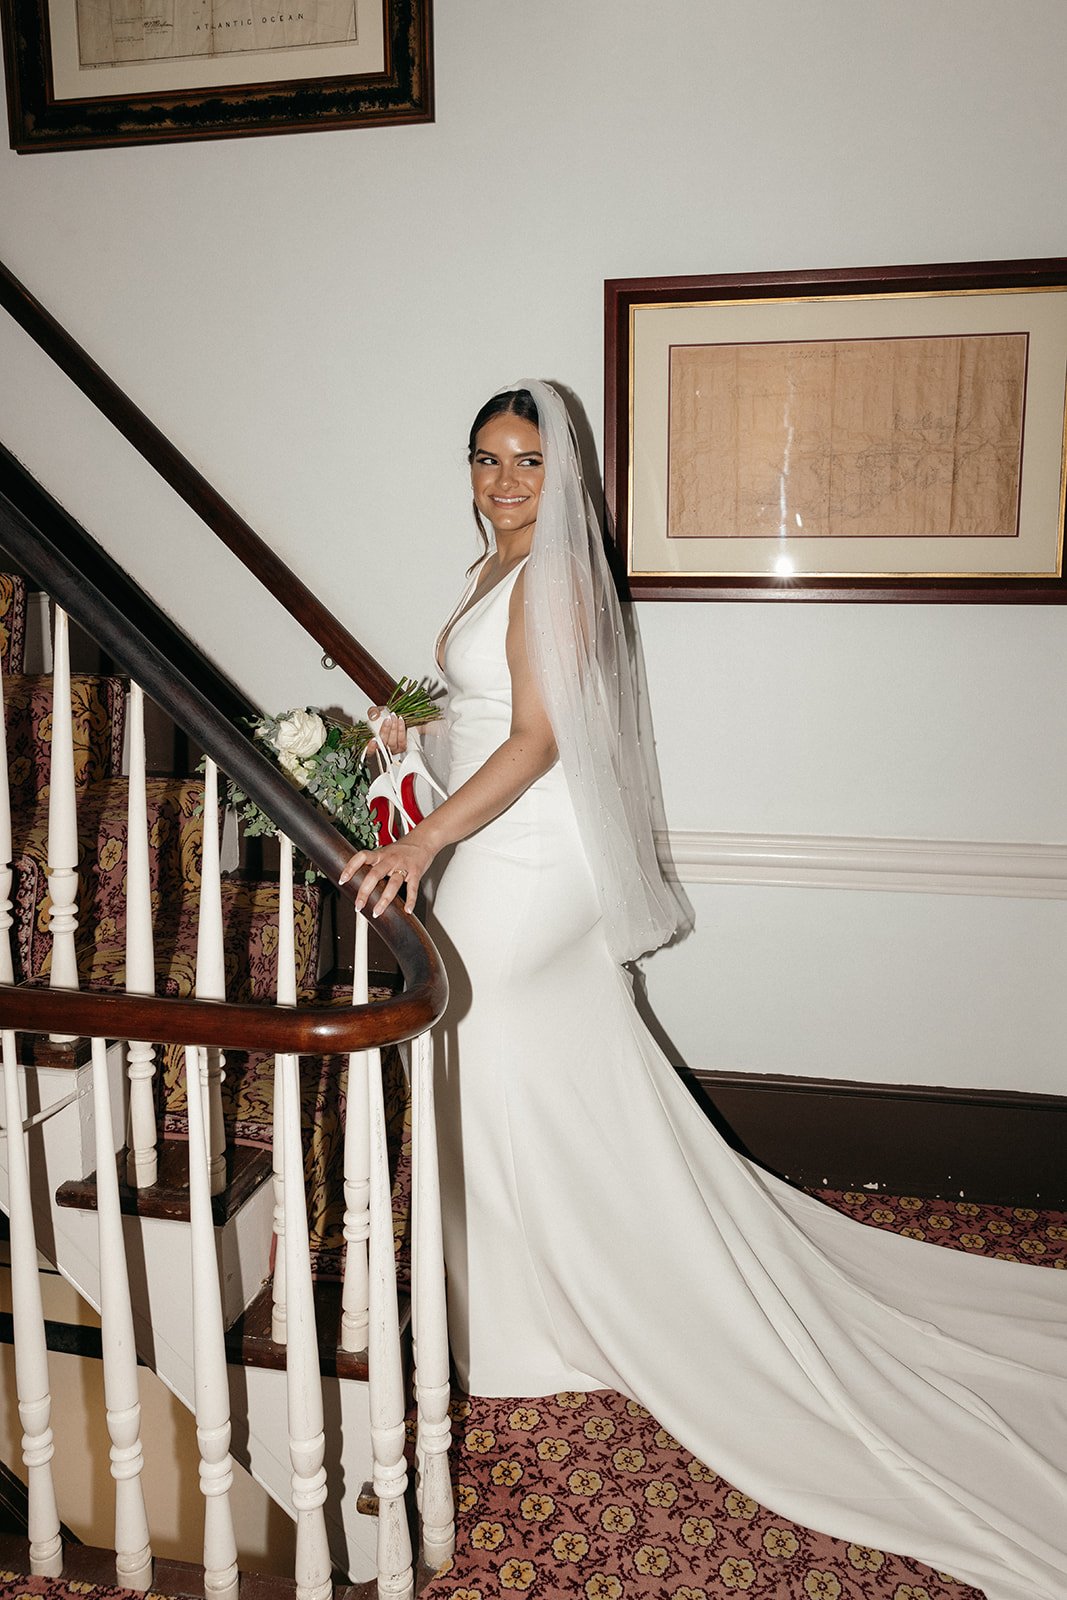 18 AUDUBON HOUSE KEY WEST - KEY WEST WEDDING PLANNER - FLORIDA KEYS WEDDING PLANNER - RACHEL FOS BENNER -.jpg